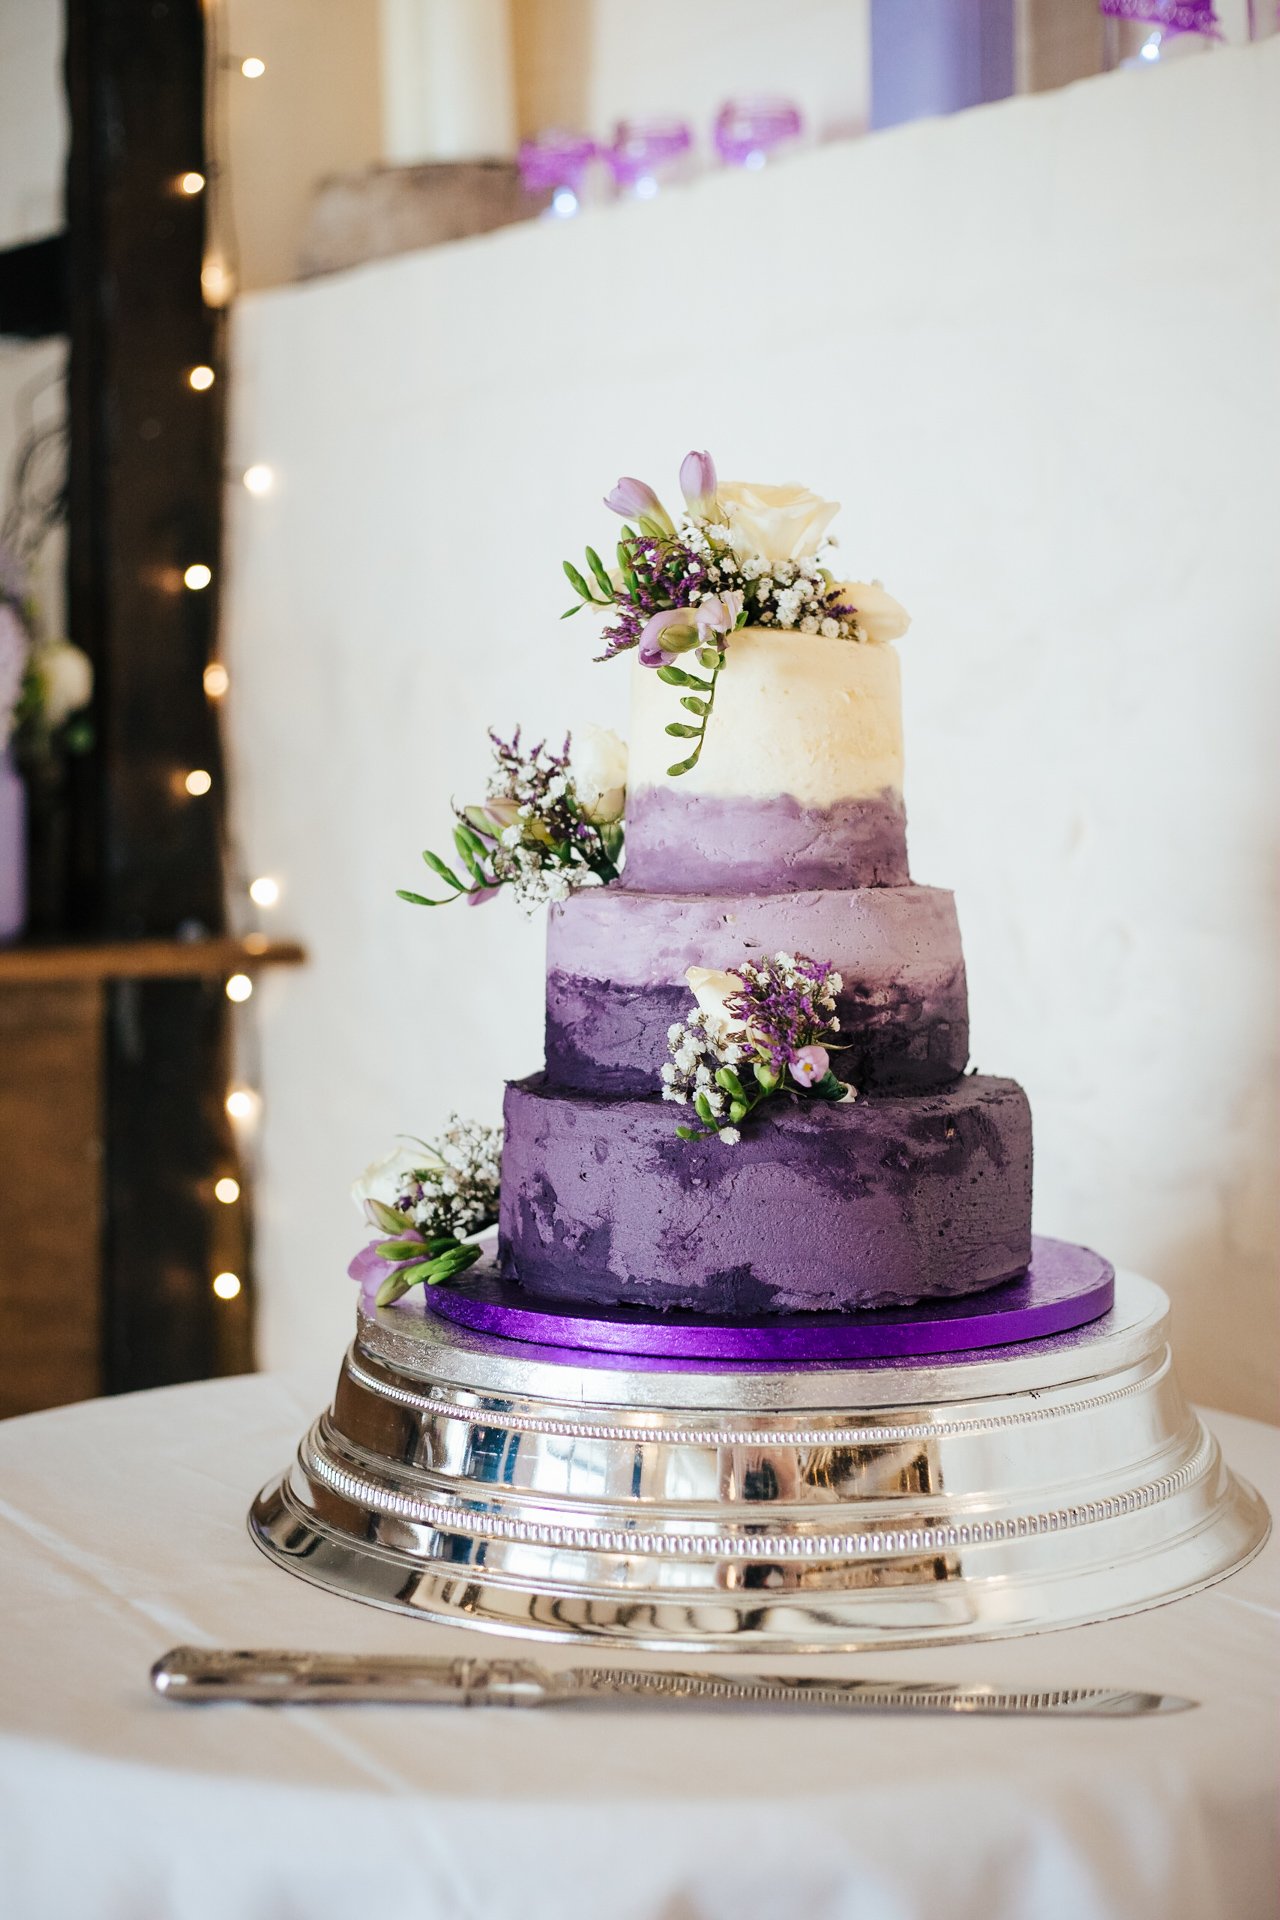 Stunning three tier wedding cake, rustic texture adorned with flowers